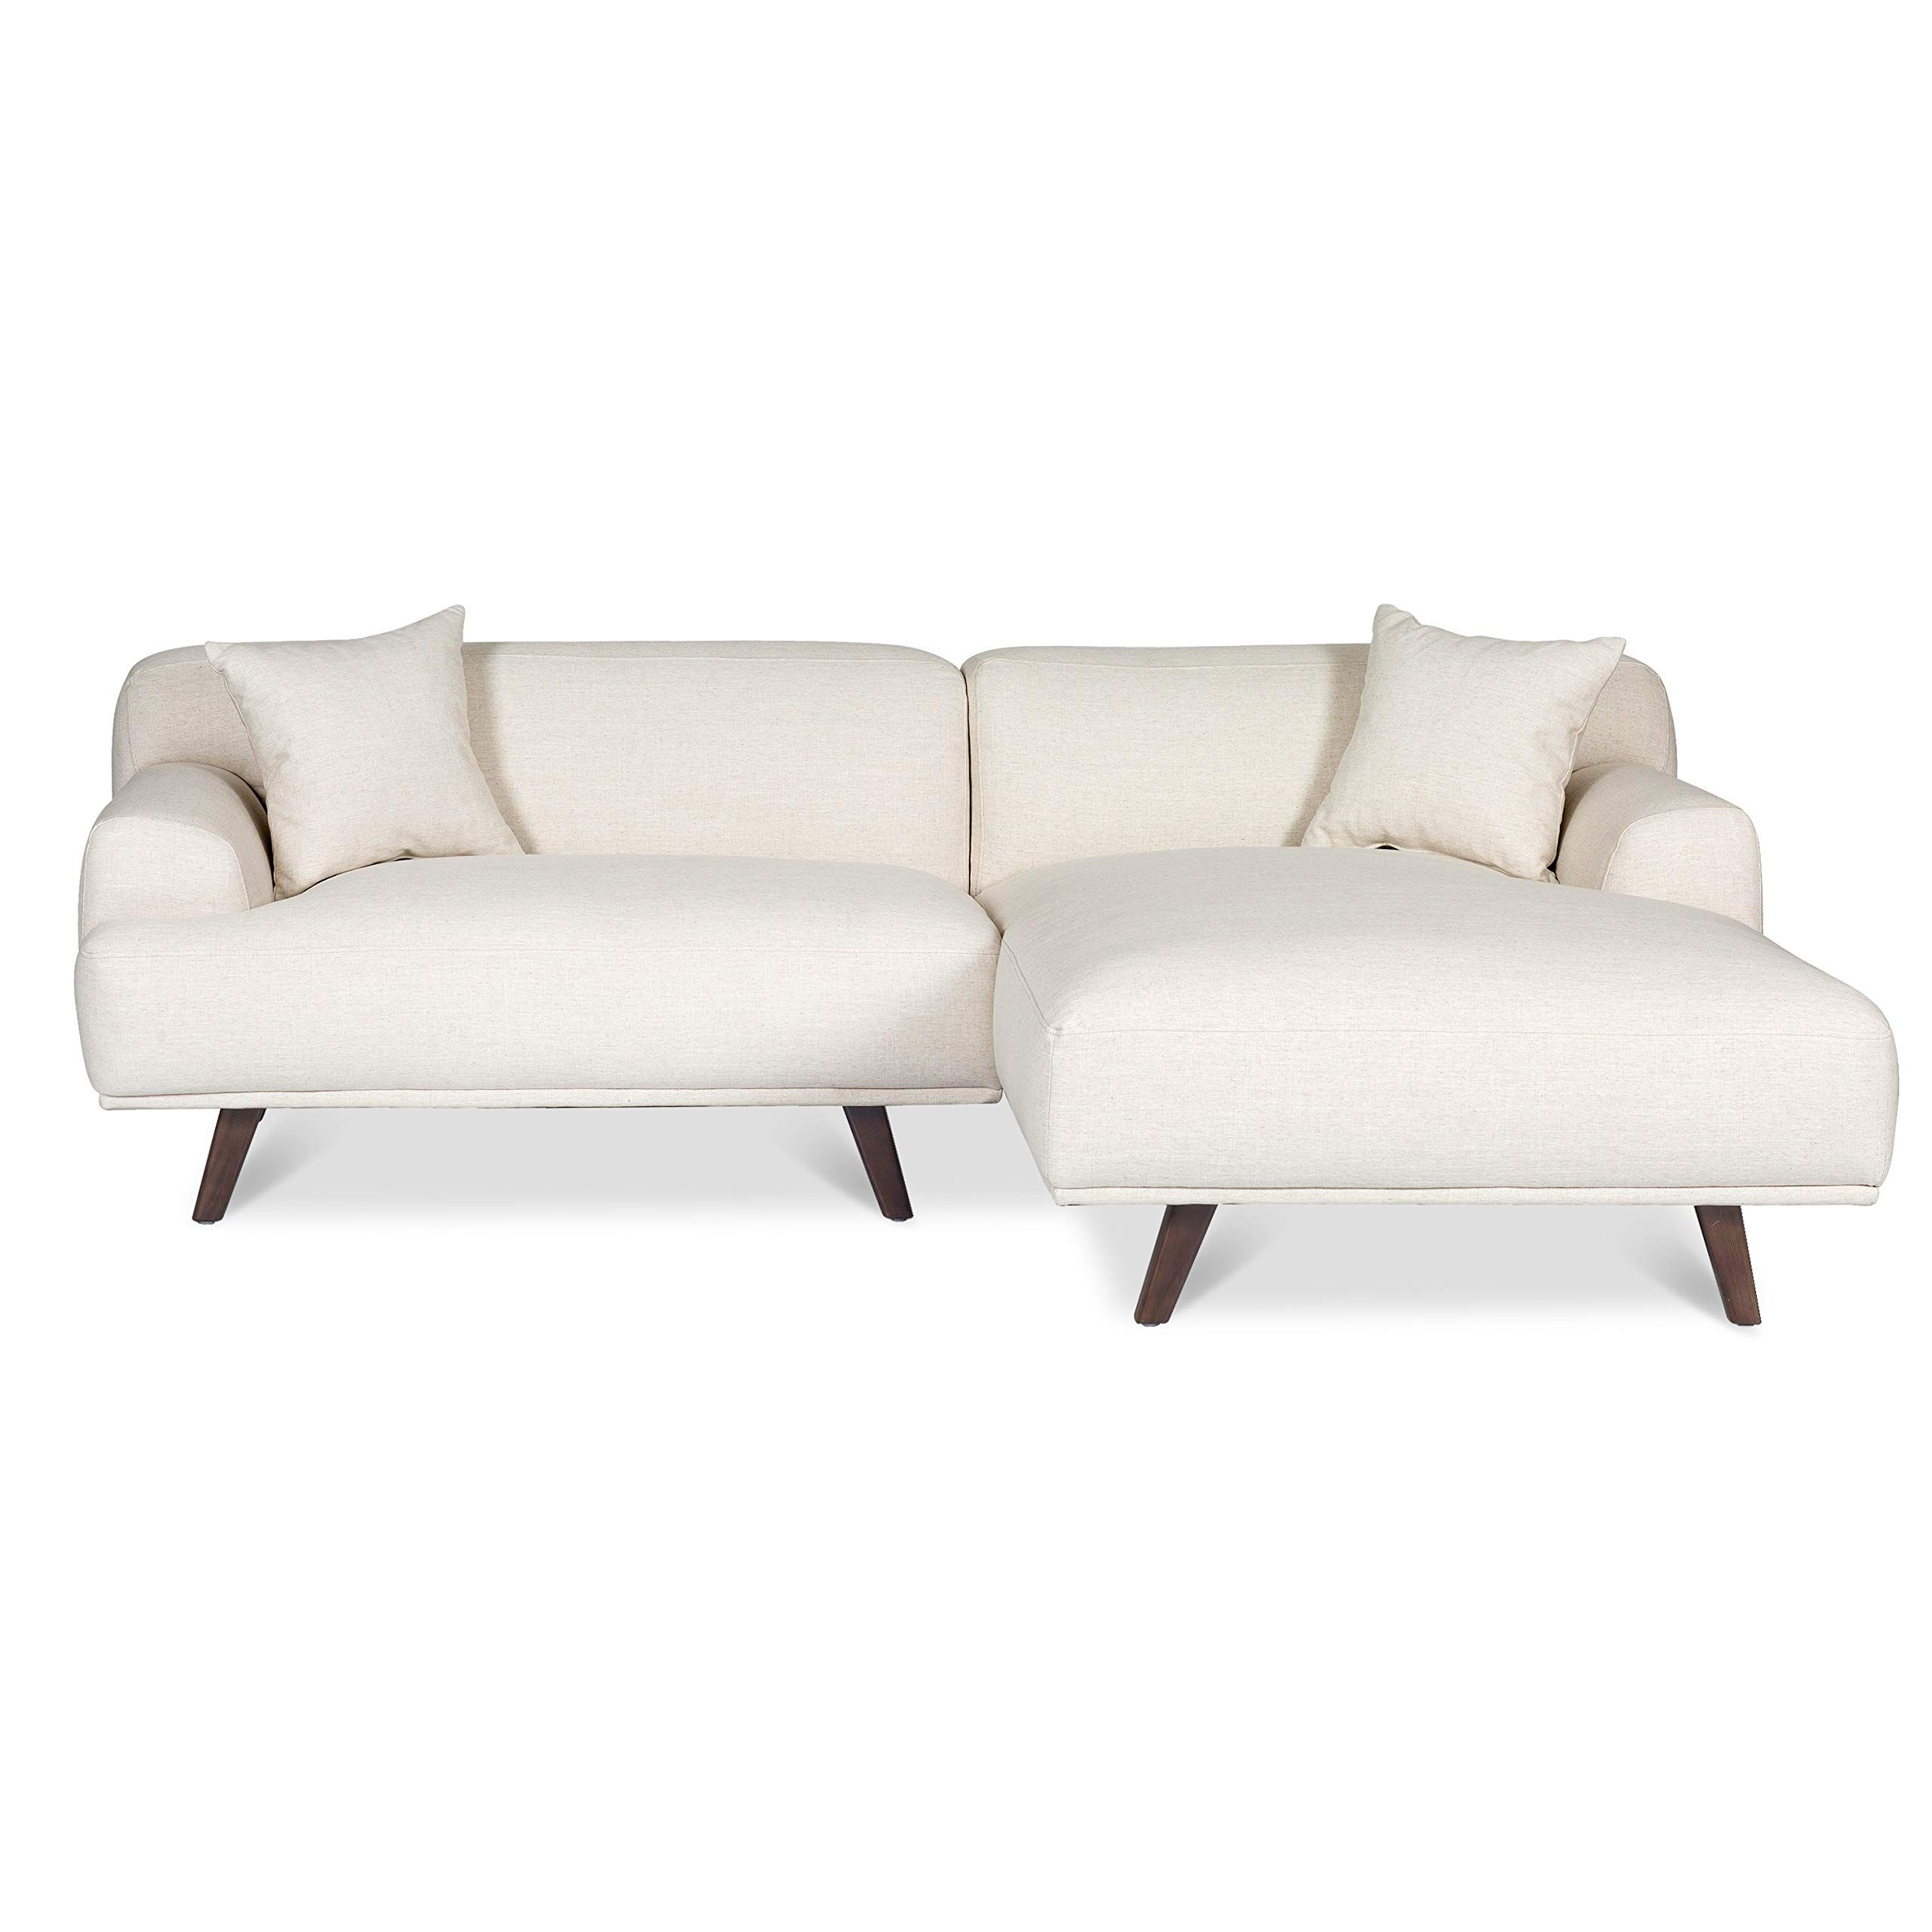 POLY & BARK Mineta Right-Facing Sectional Sofa, Mist White | Amazon (US)